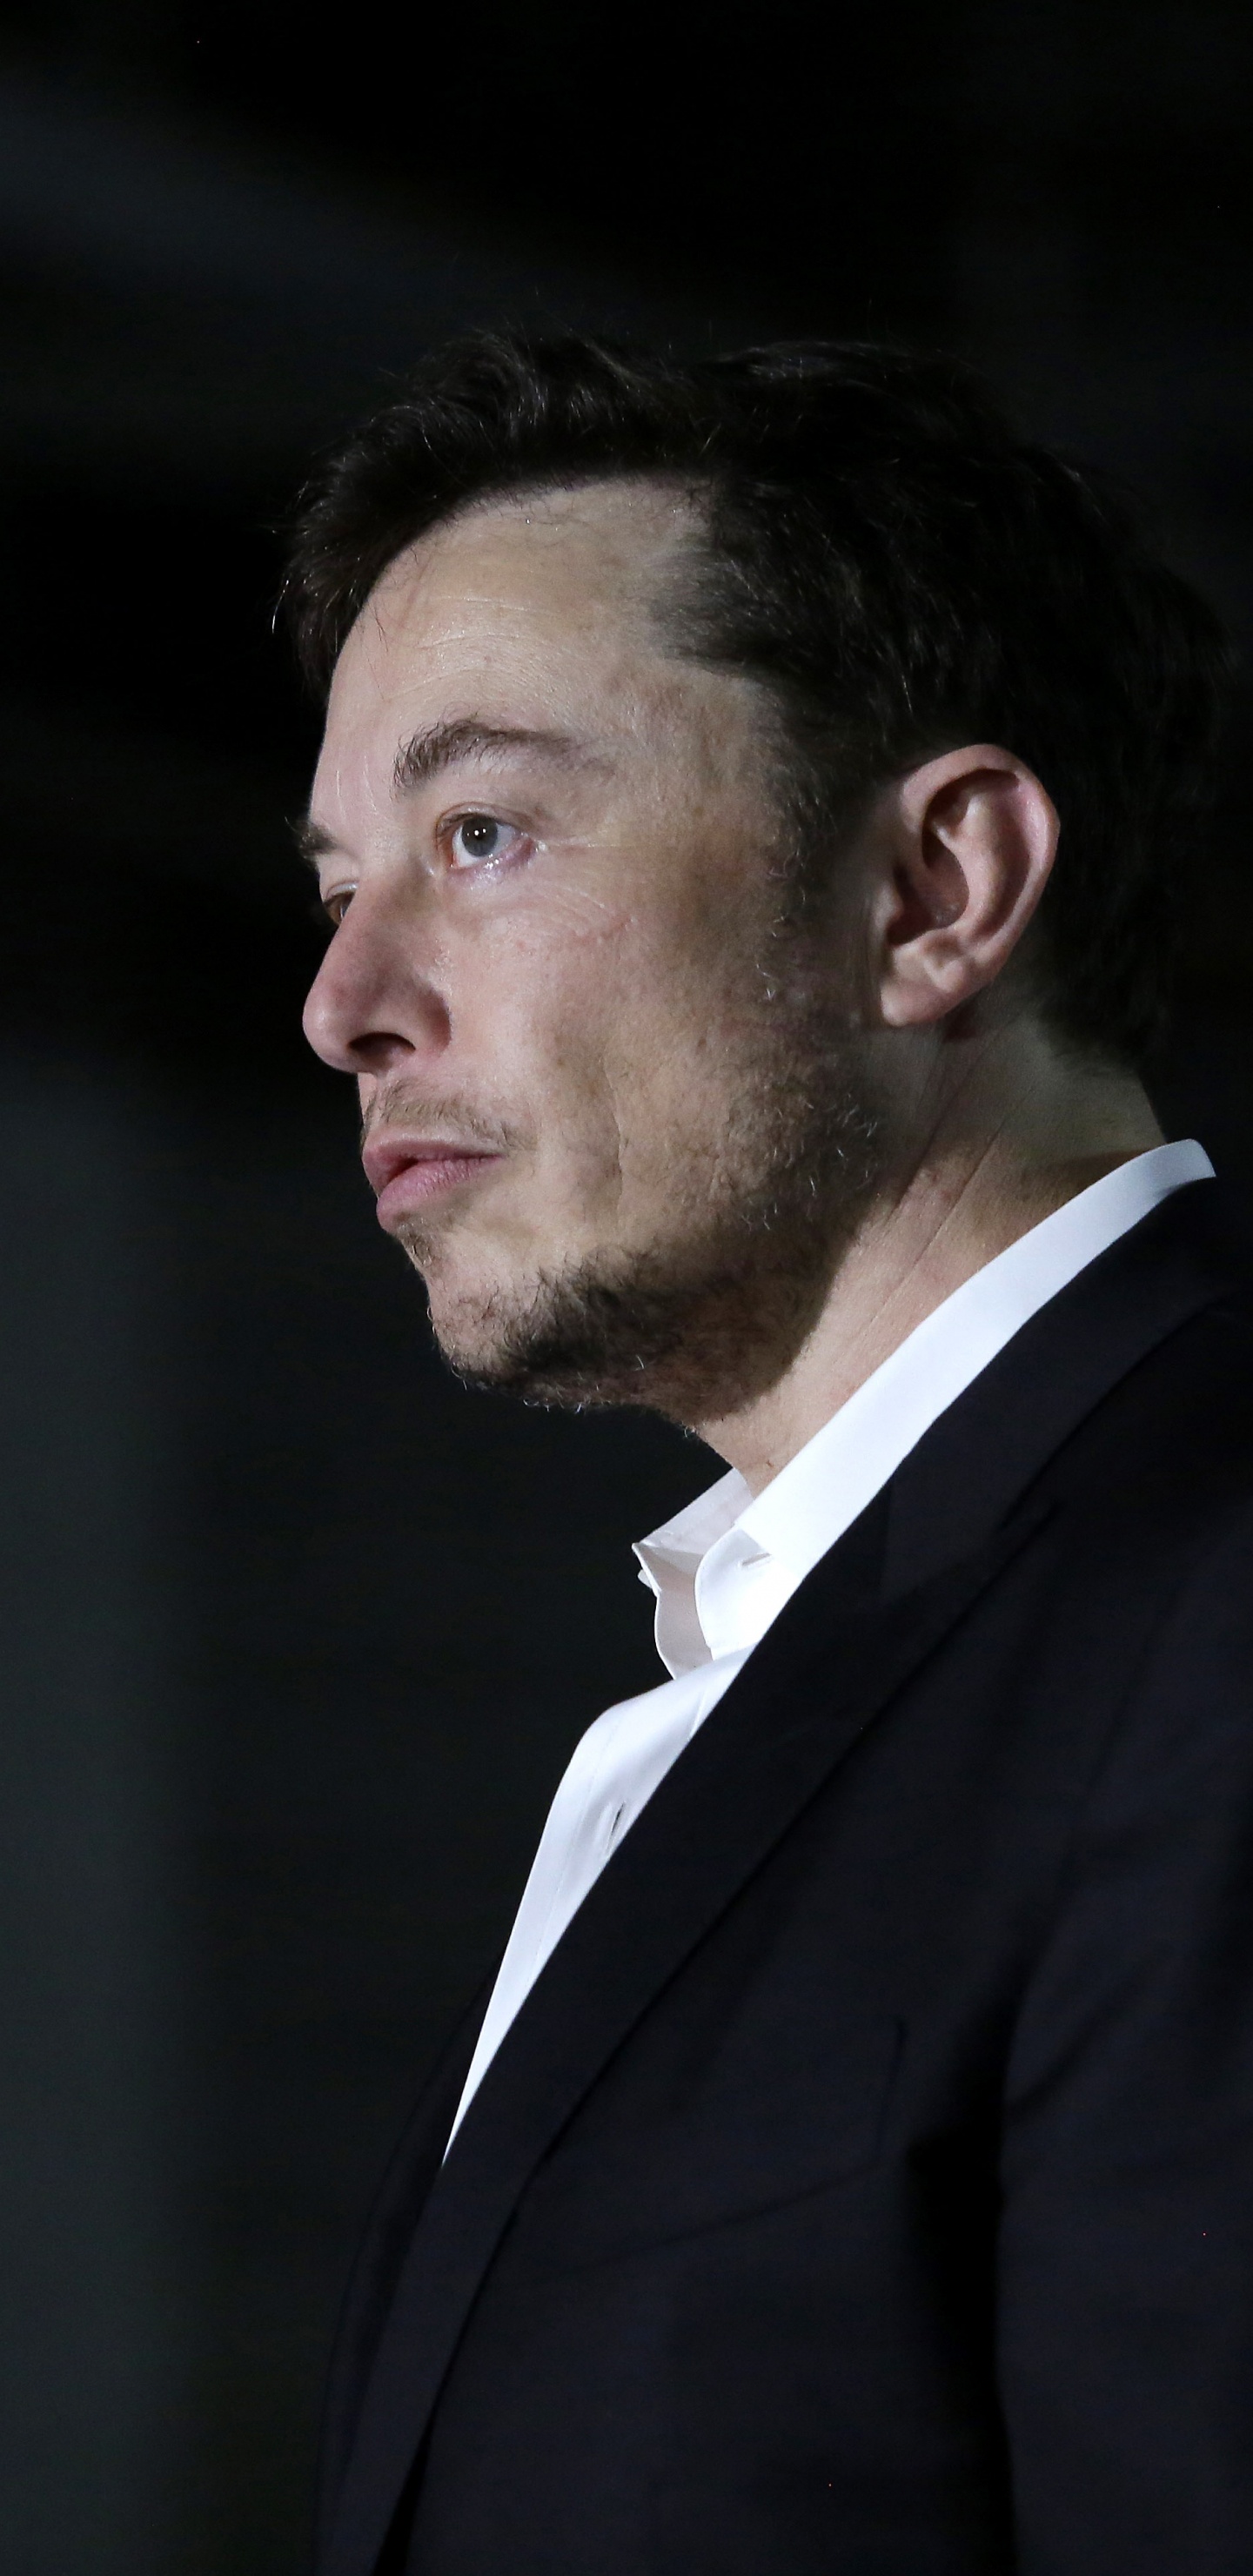 Elon Musk, Tham Luang Cave Rescue, Suit, Businessperson, Entrepreneur. Wallpaper in 1440x2960 Resolution